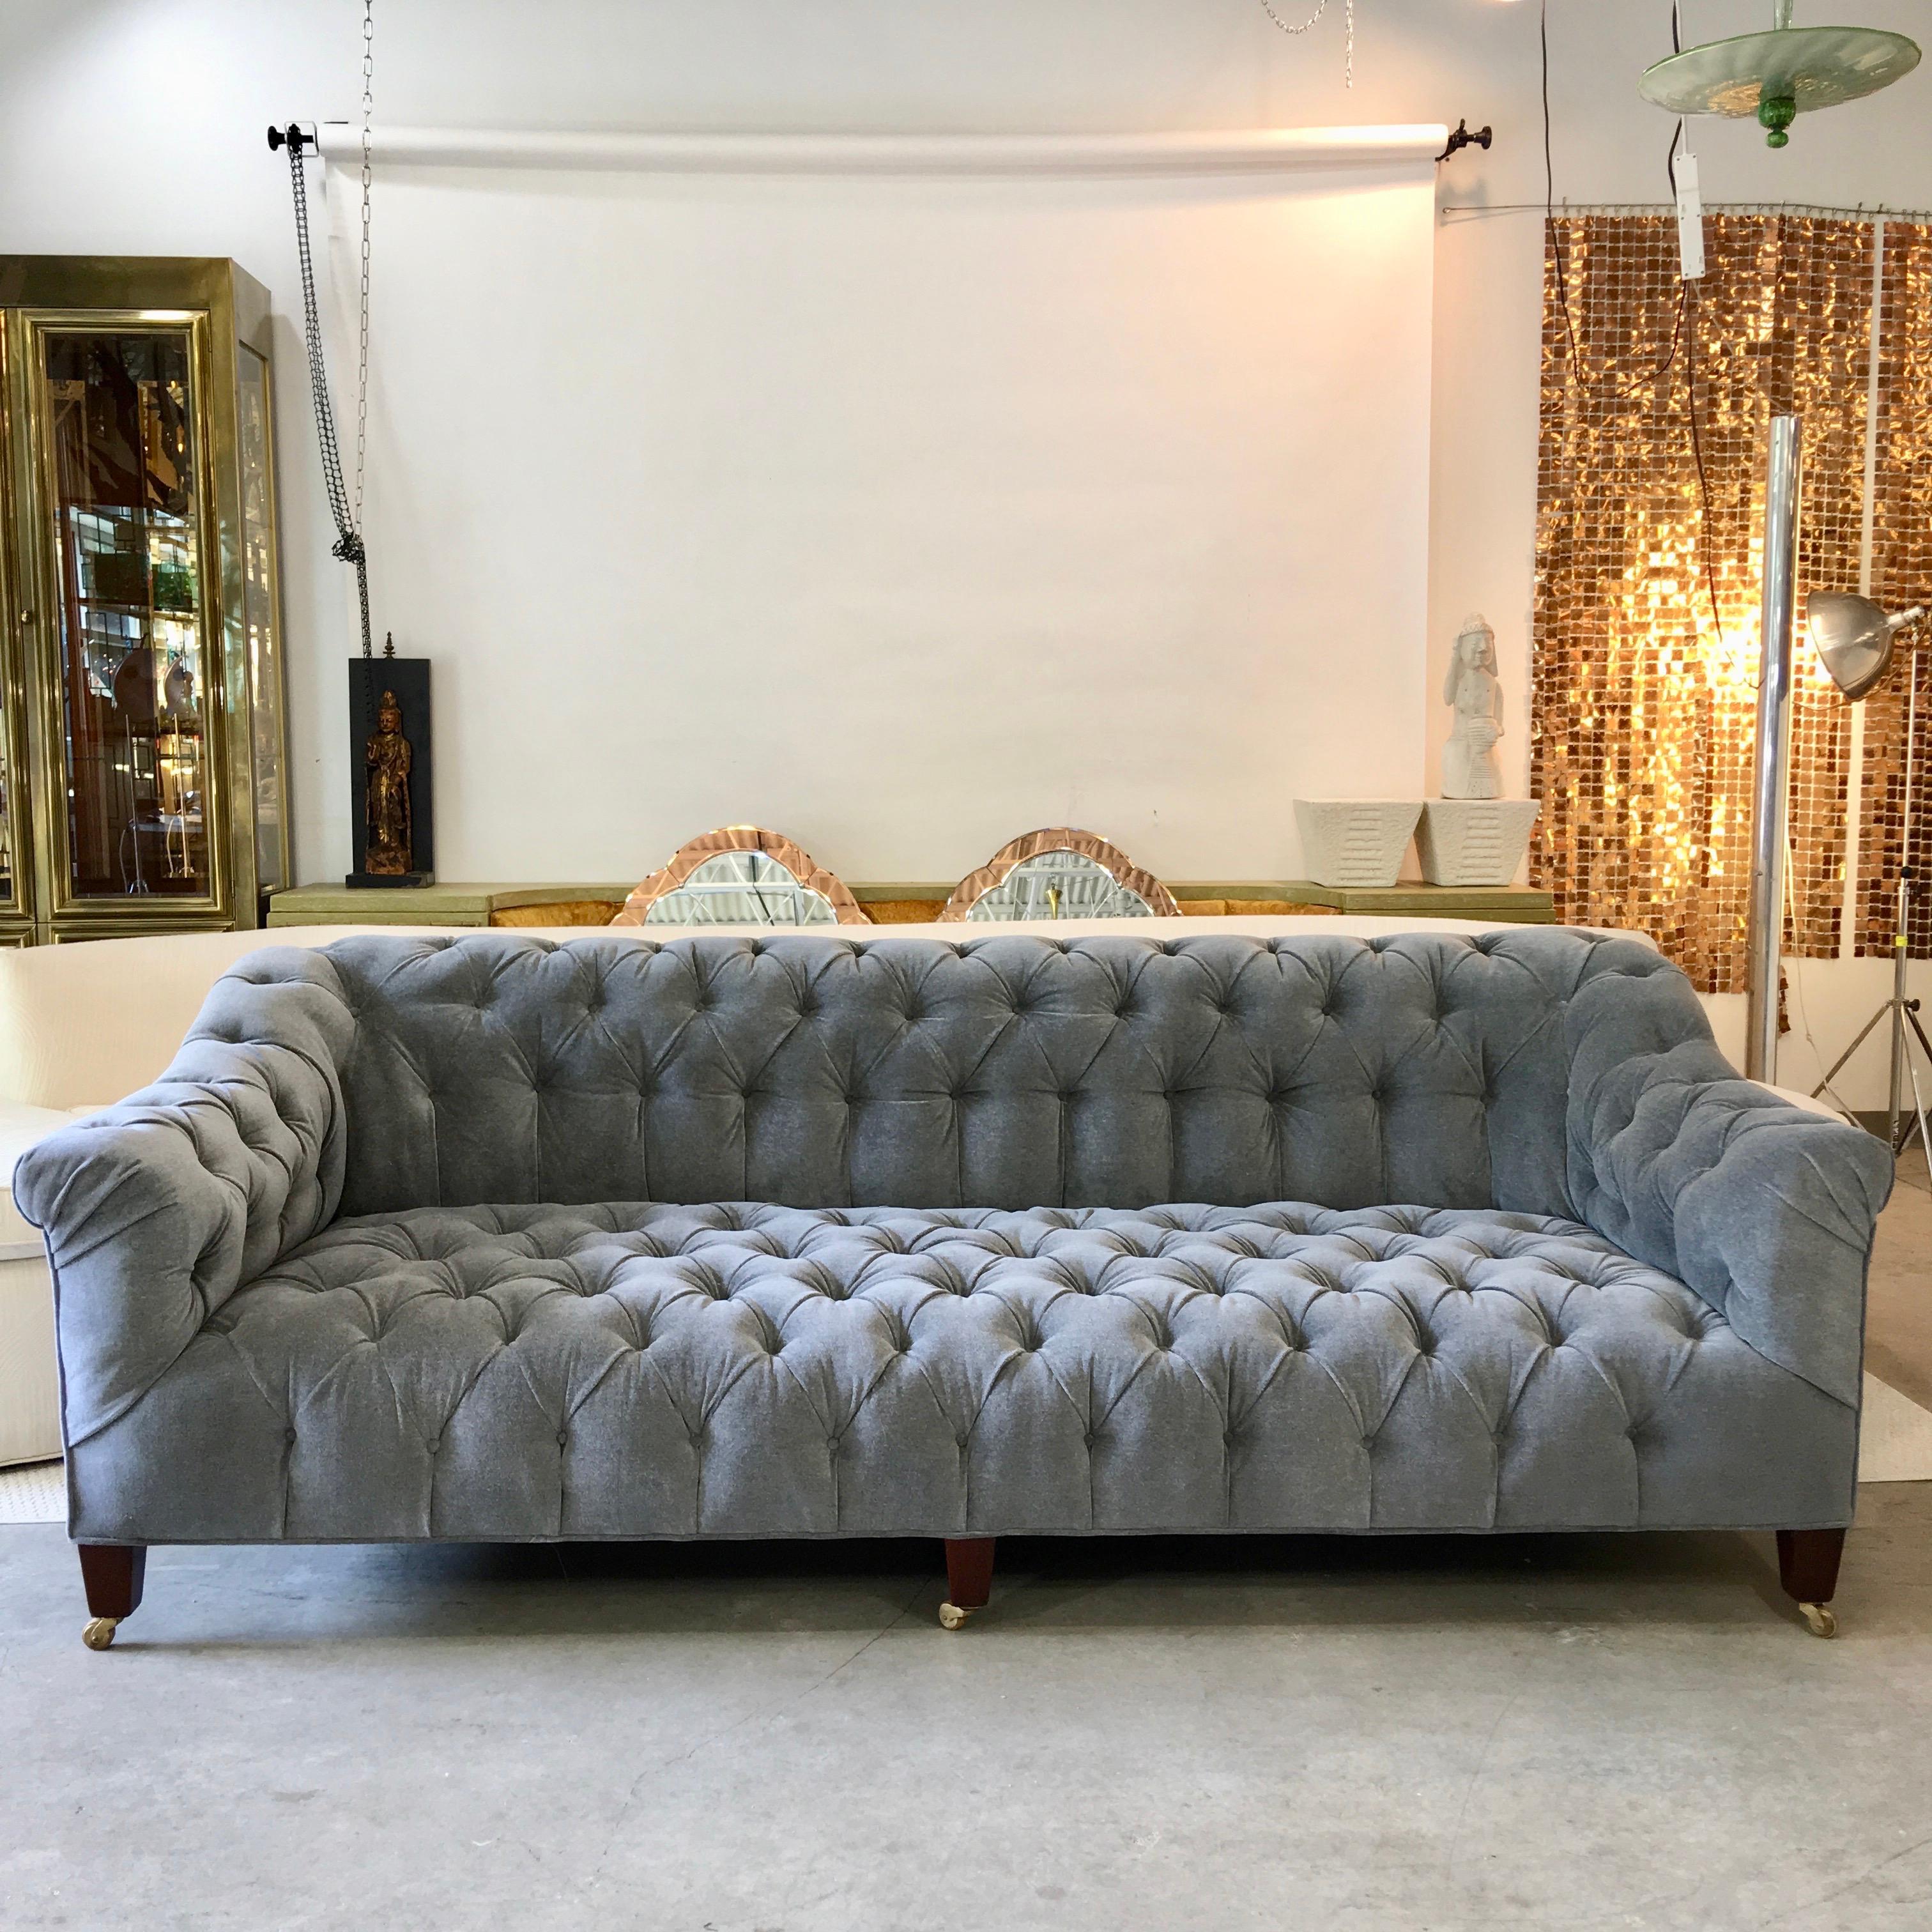 gray chesterfield sofa